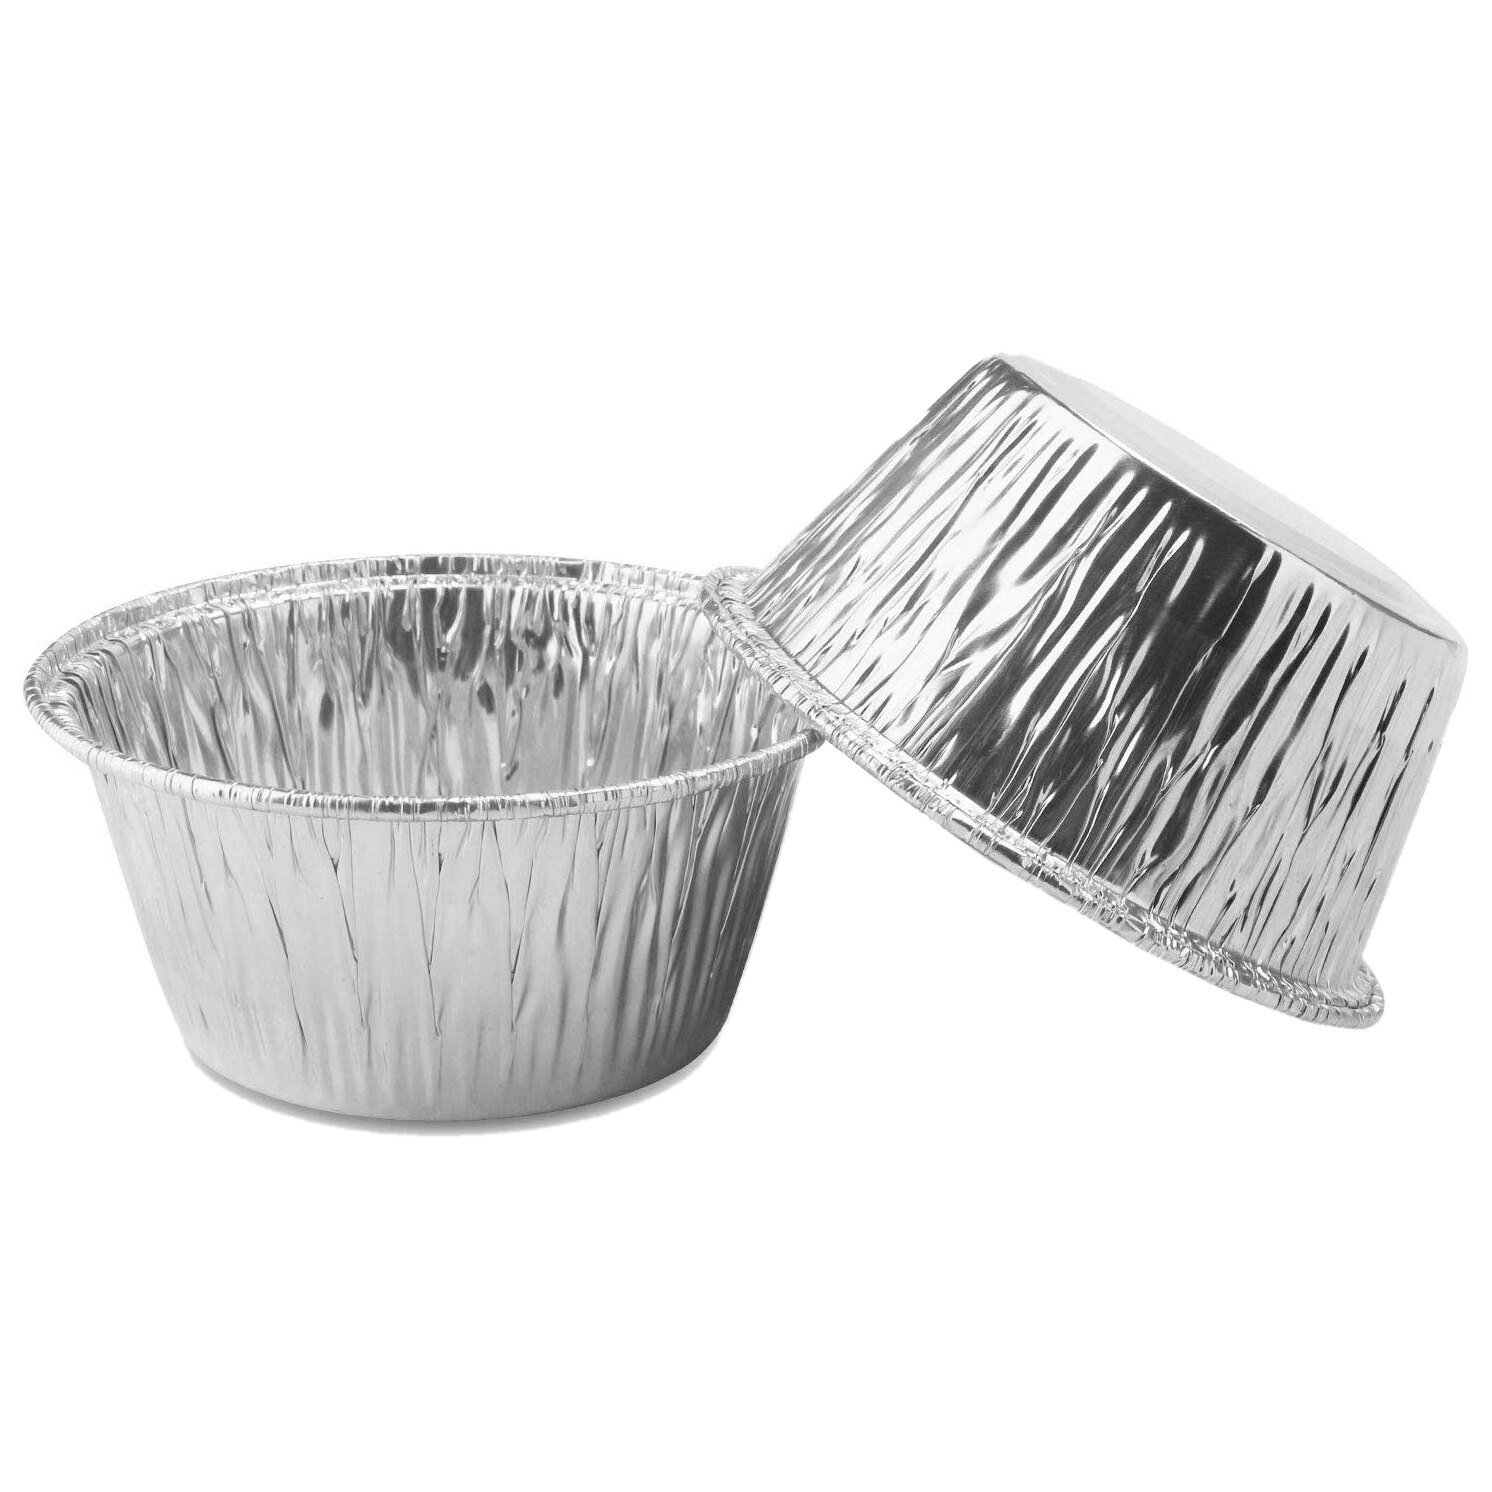 150 Stuks Aluminiumfolie Cupcake Cups Ramekin Muffin Baking Cups Wegwerp Muffin Liners Ramekin Houders Kopjes Aluminium Cupcake